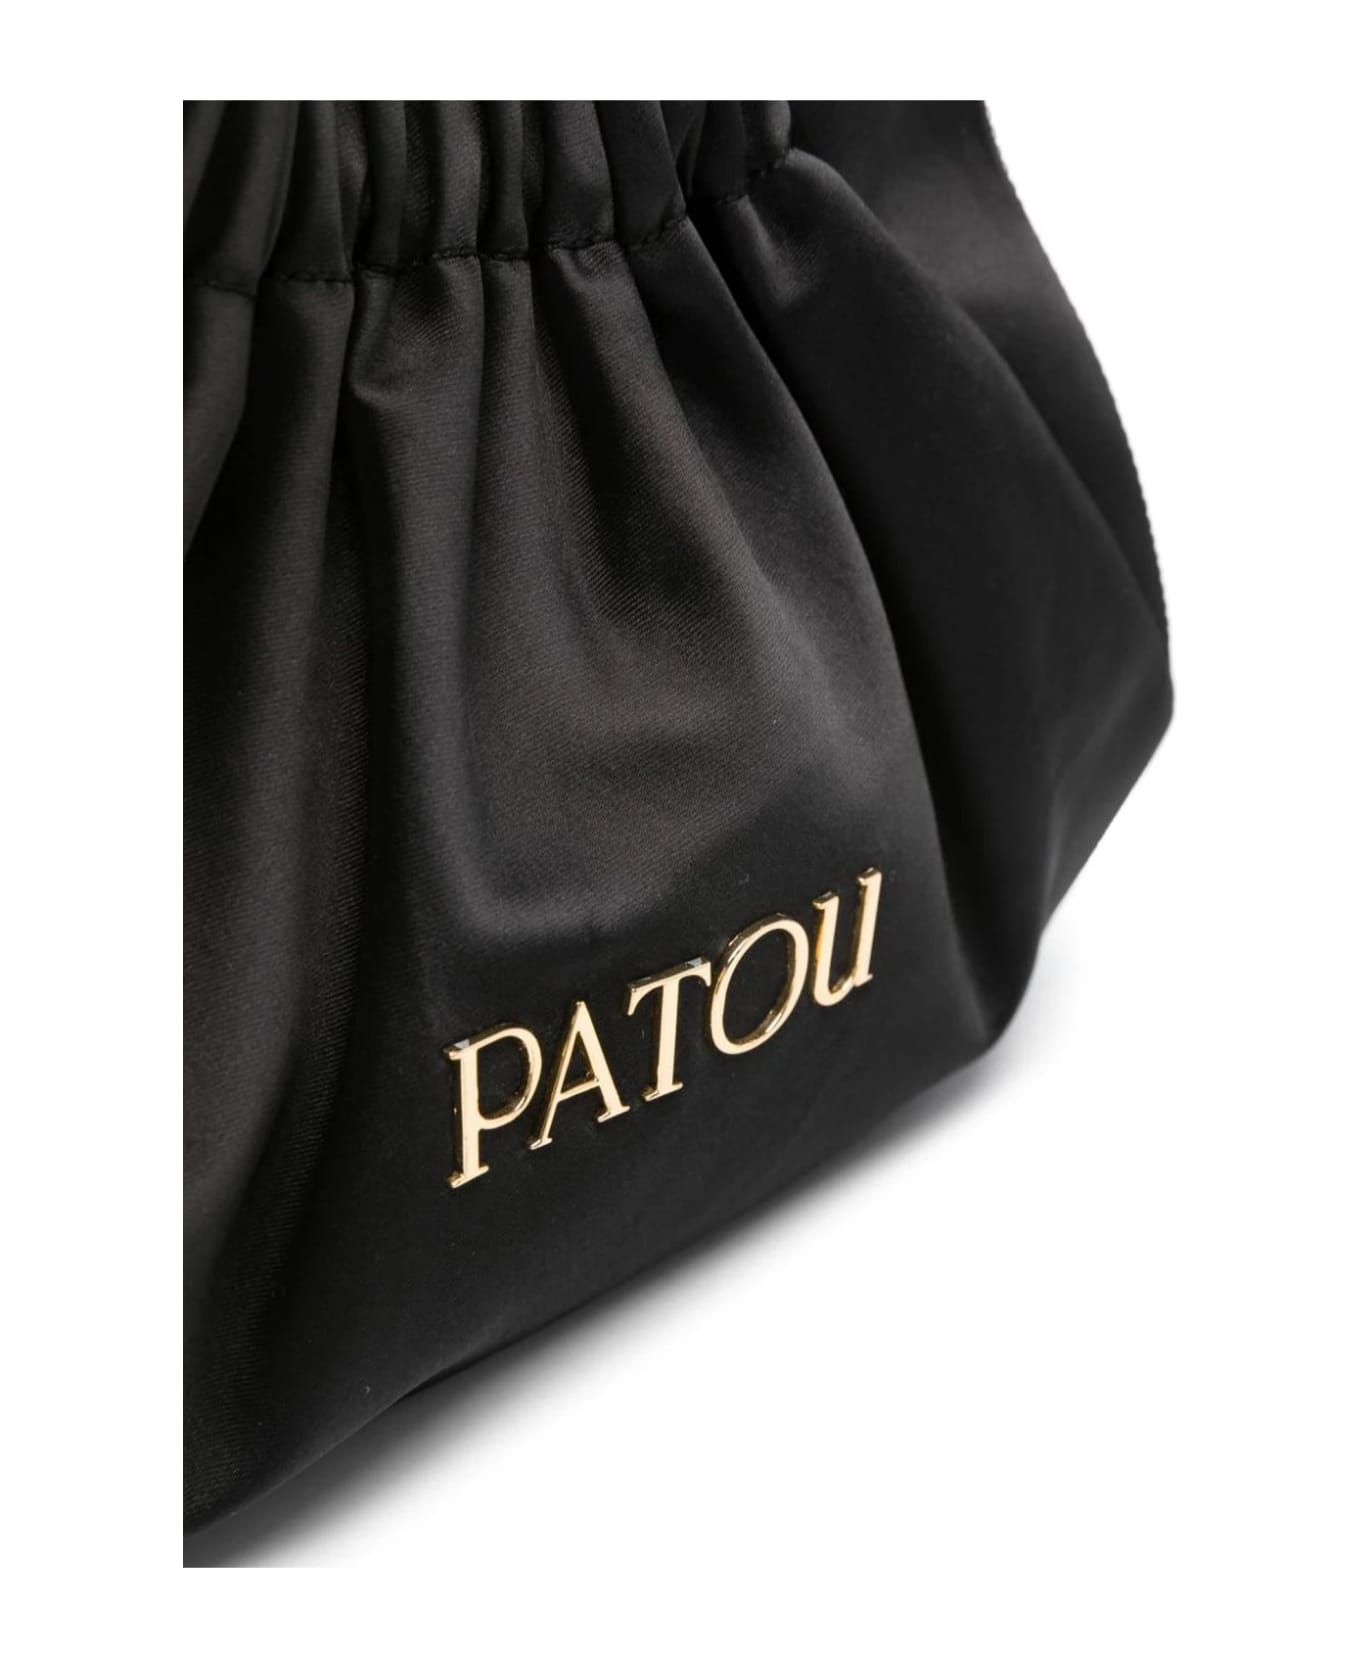 Patou Le Biscuit Tote Bag - Black